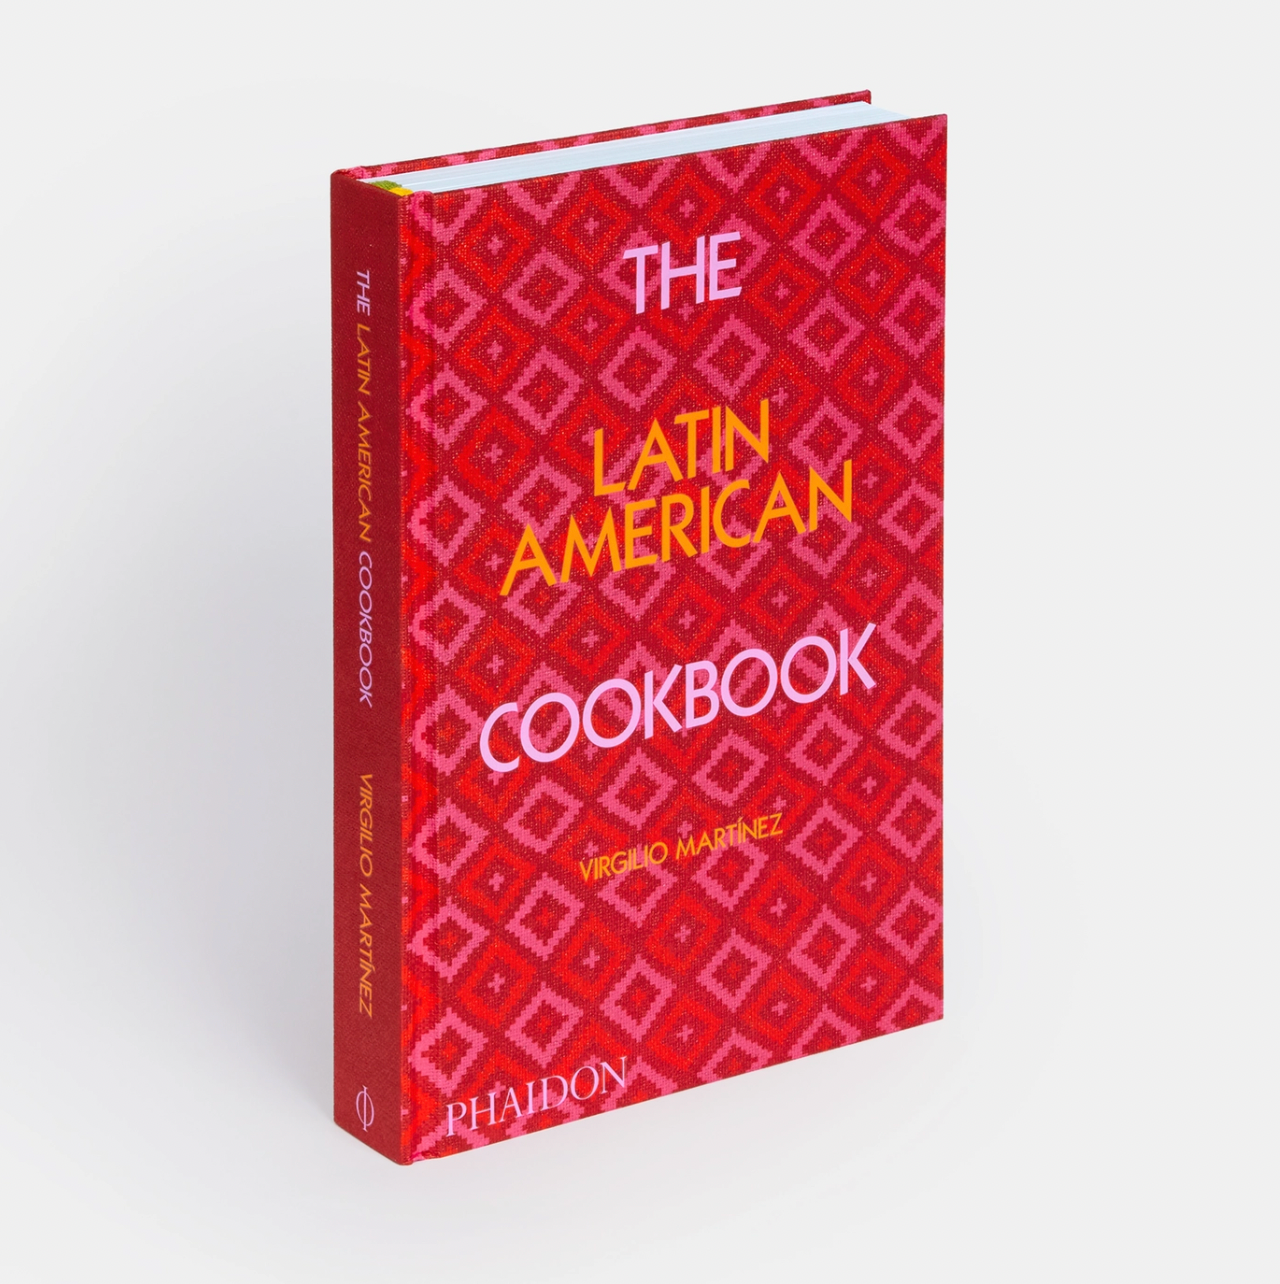 The Latin American Cookbook Virgilio Martinez